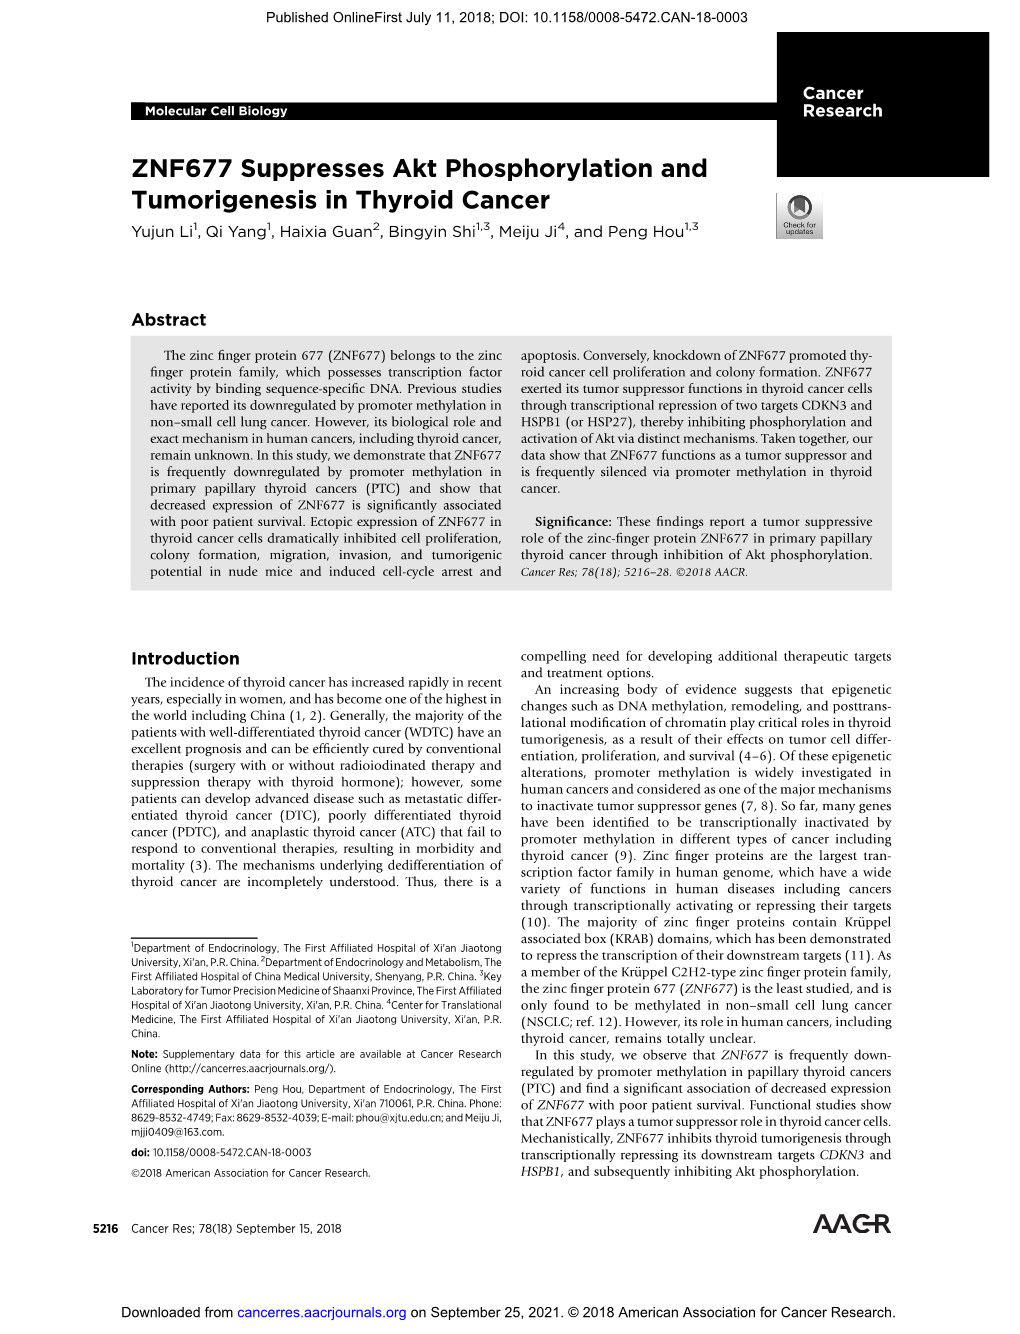 ZNF677 Suppresses Akt Phosphorylation and Tumorigenesis in Thyroid Cancer Yujun Li1, Qi Yang1, Haixia Guan2, Bingyin Shi1,3, Meiju Ji4, and Peng Hou1,3